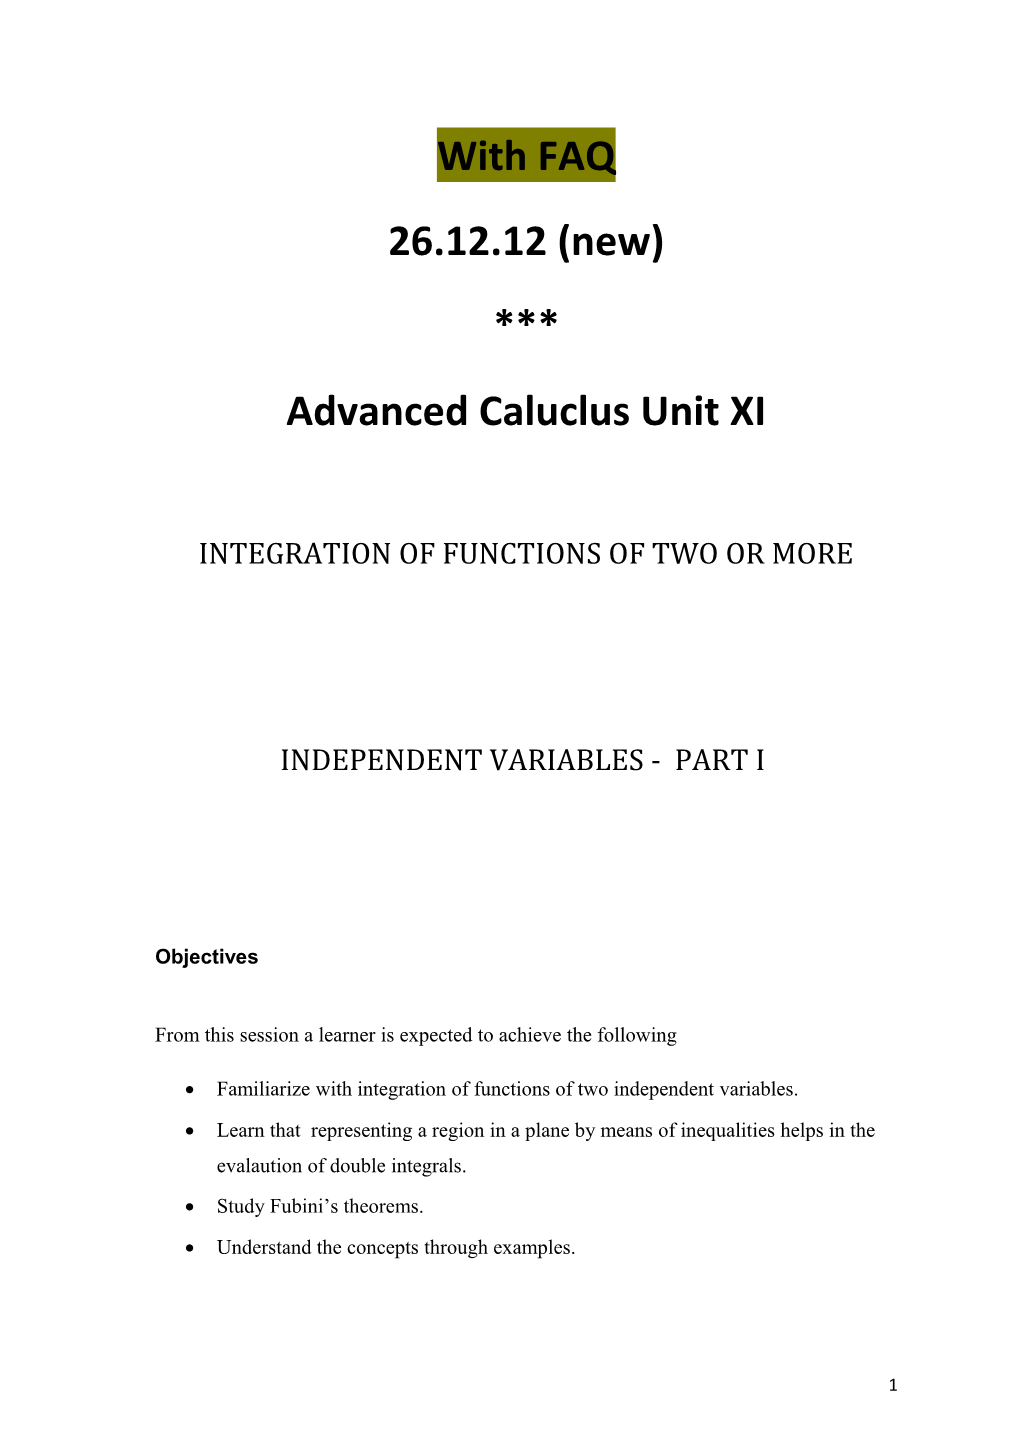 Advanced Caluclus Unit XI